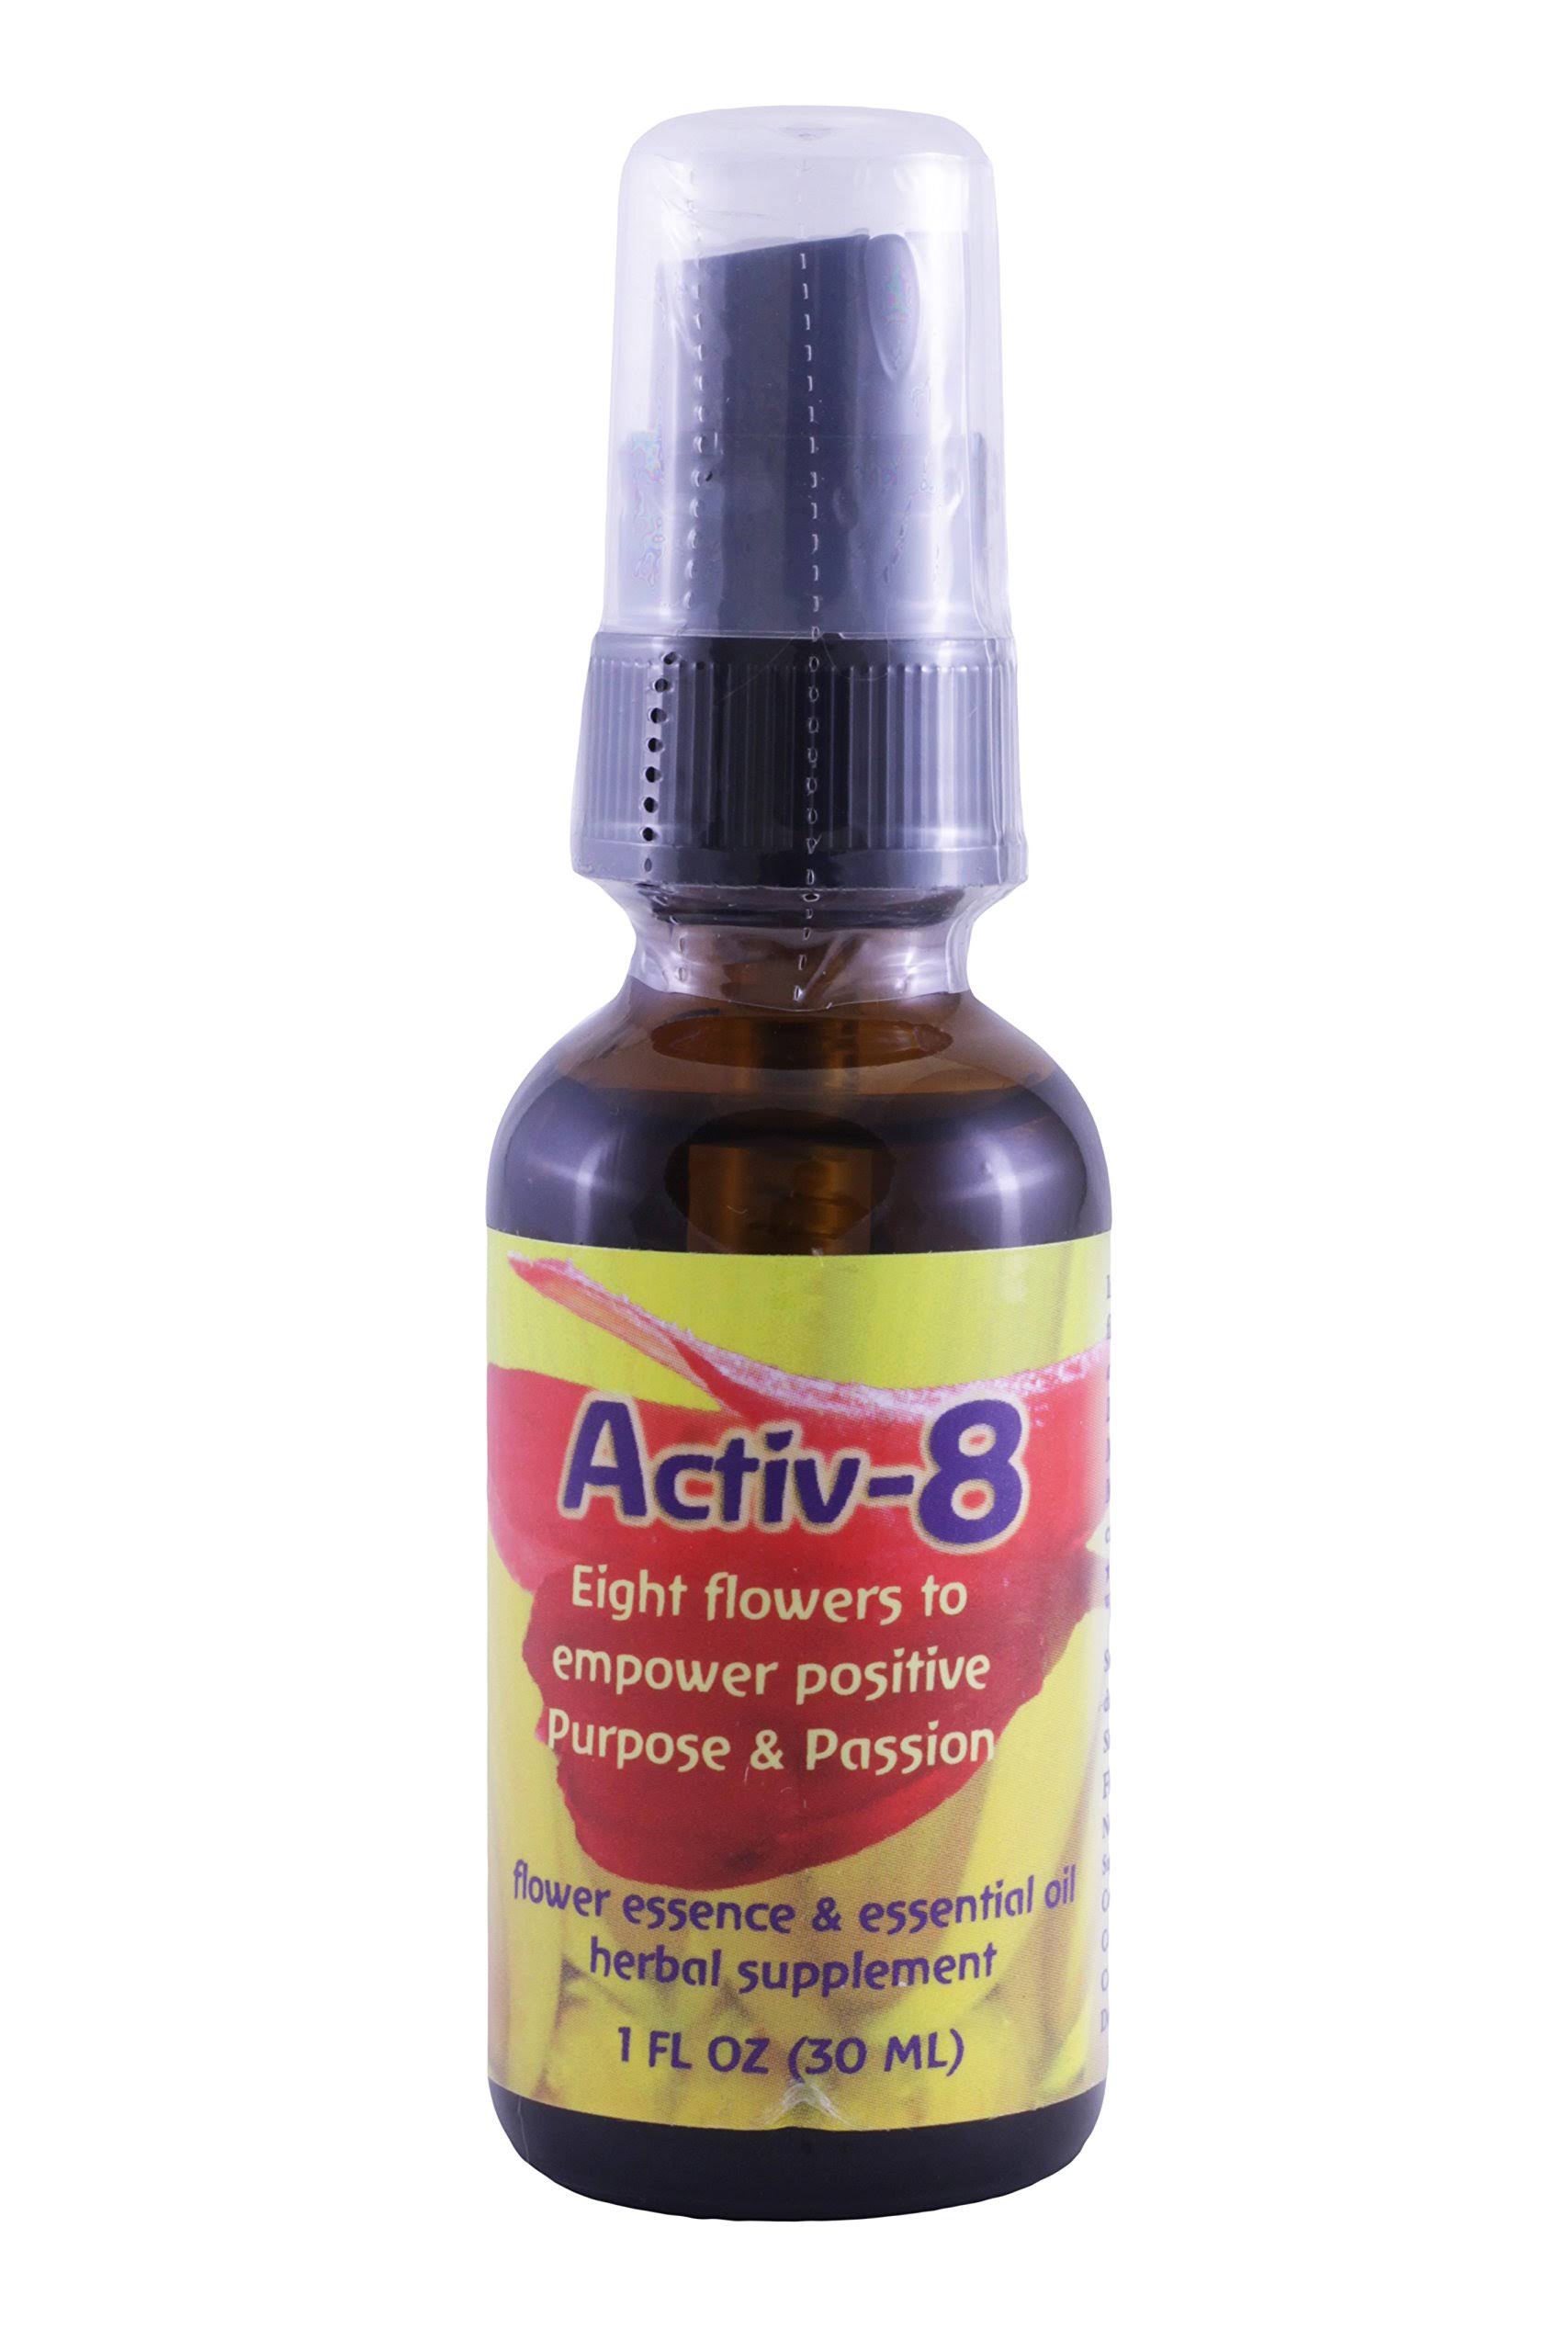 Activ-8 Spray 1 oz by Flower Essence Services